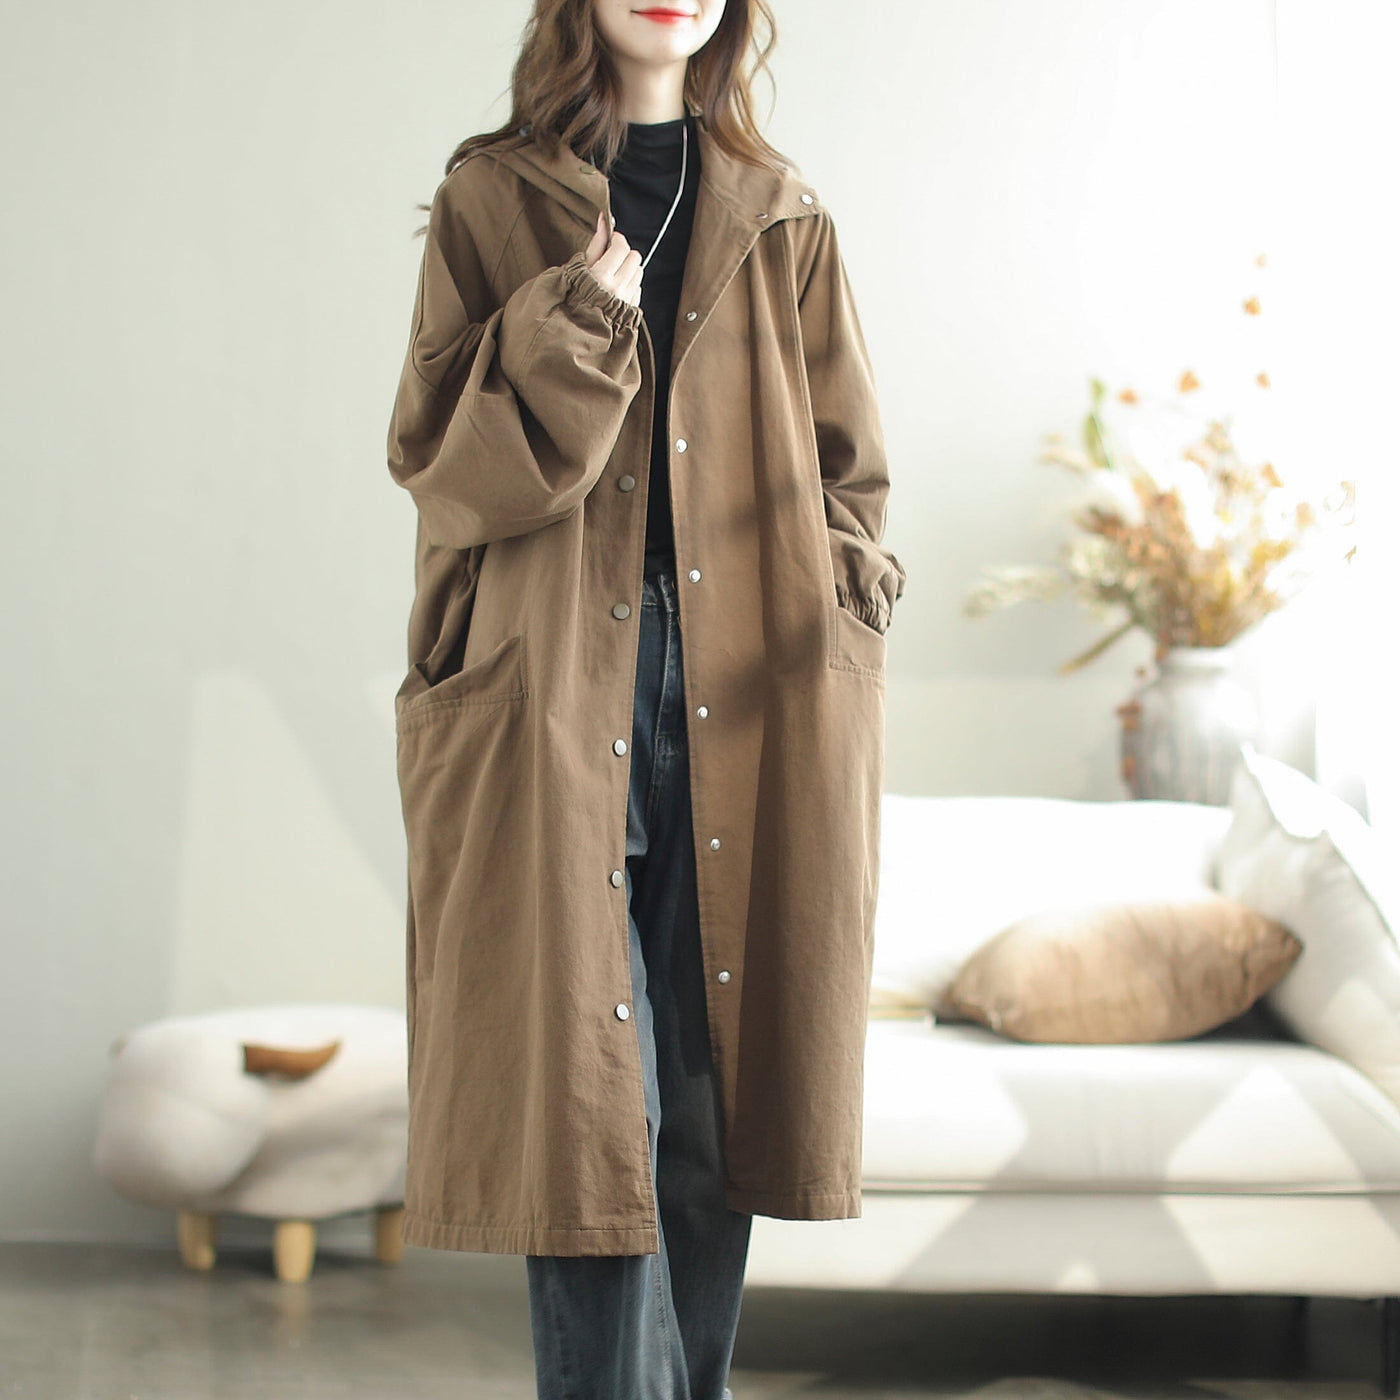 Autumn Stylish Casual Fashion Hooded Overcoat